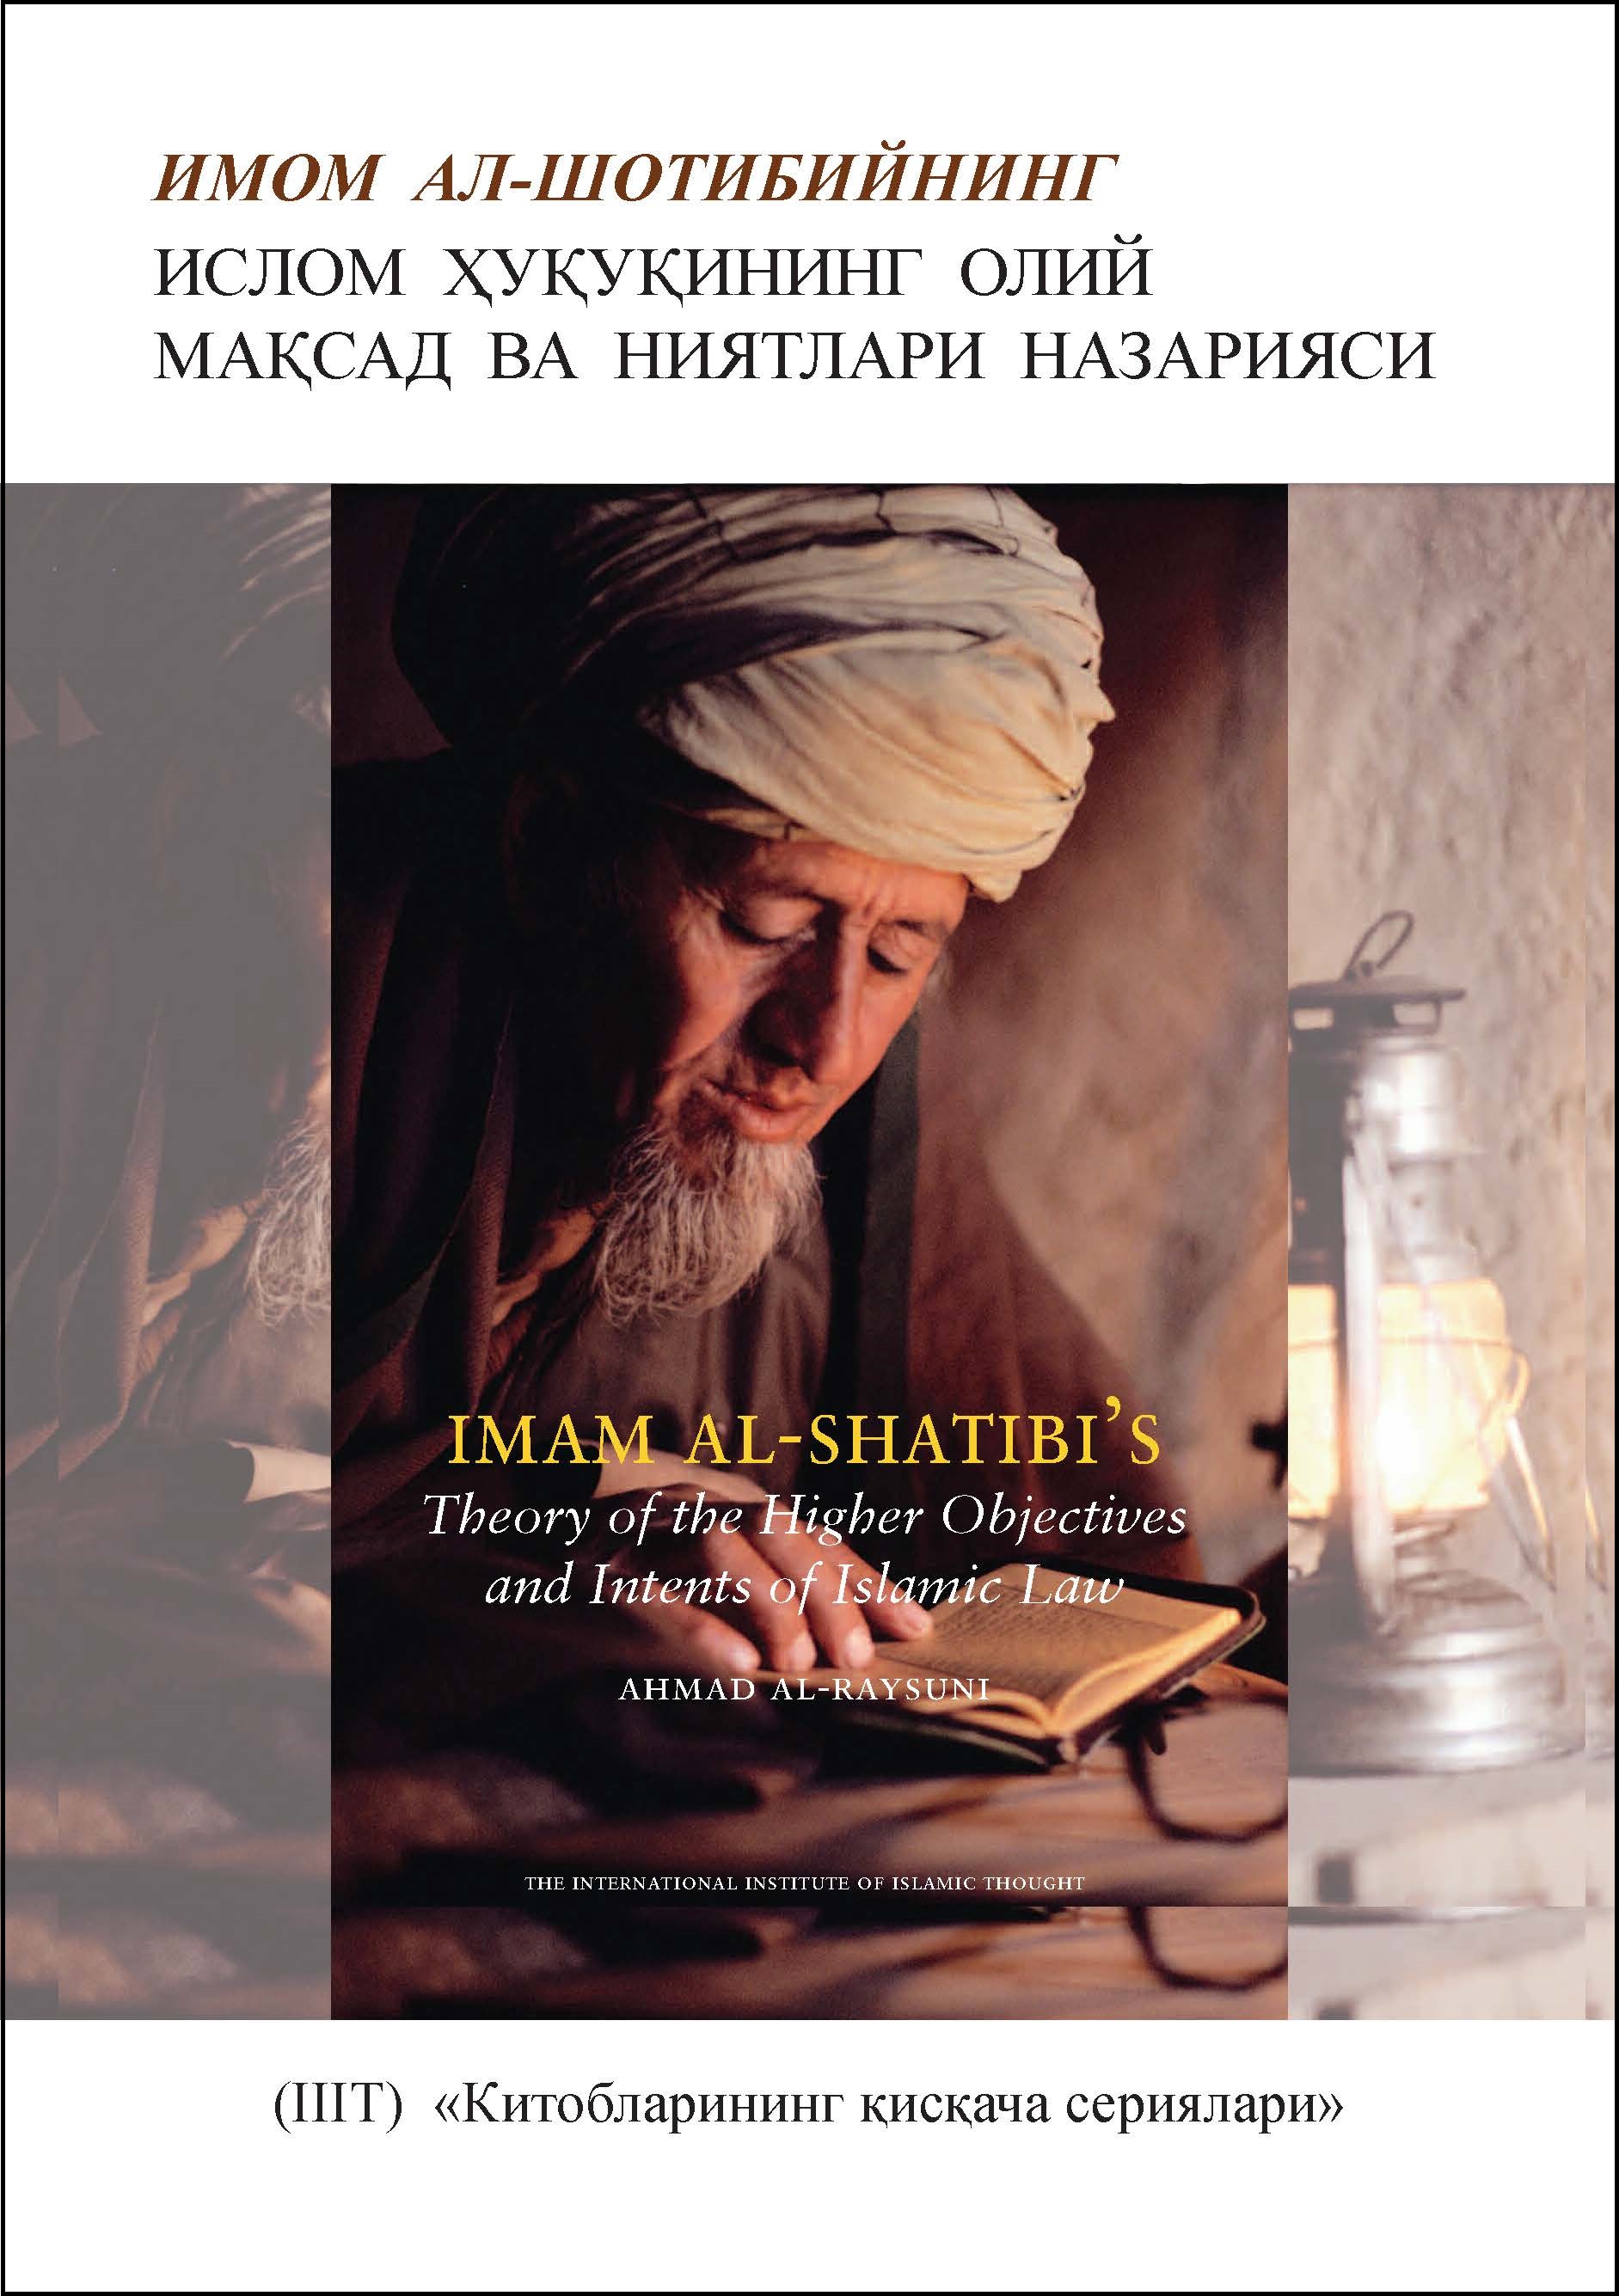 Uzbek: Китобларининг қисқача сериялари: Имом ал-Шотибийнинг Ислом ҳуқуқининг Олий Мақсад ва ниятлари назарияси (Book-in-Brief: Imam Al-Shatibi’s Theory of the Higher Objectives and Intents of Islamic Law)